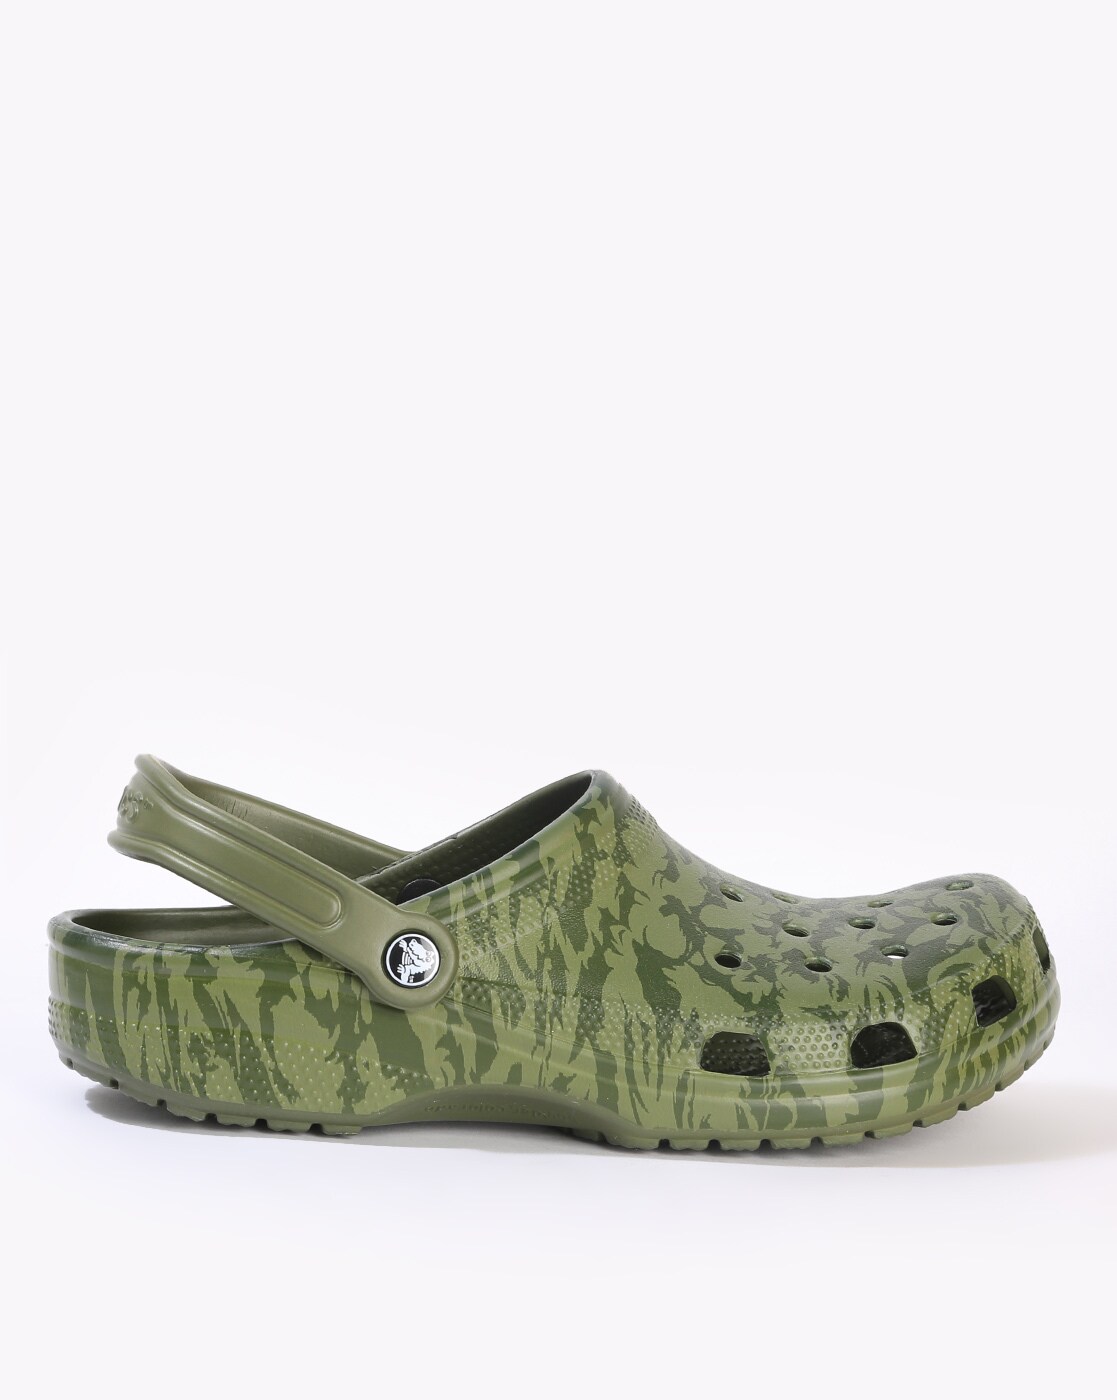 army crocs mens